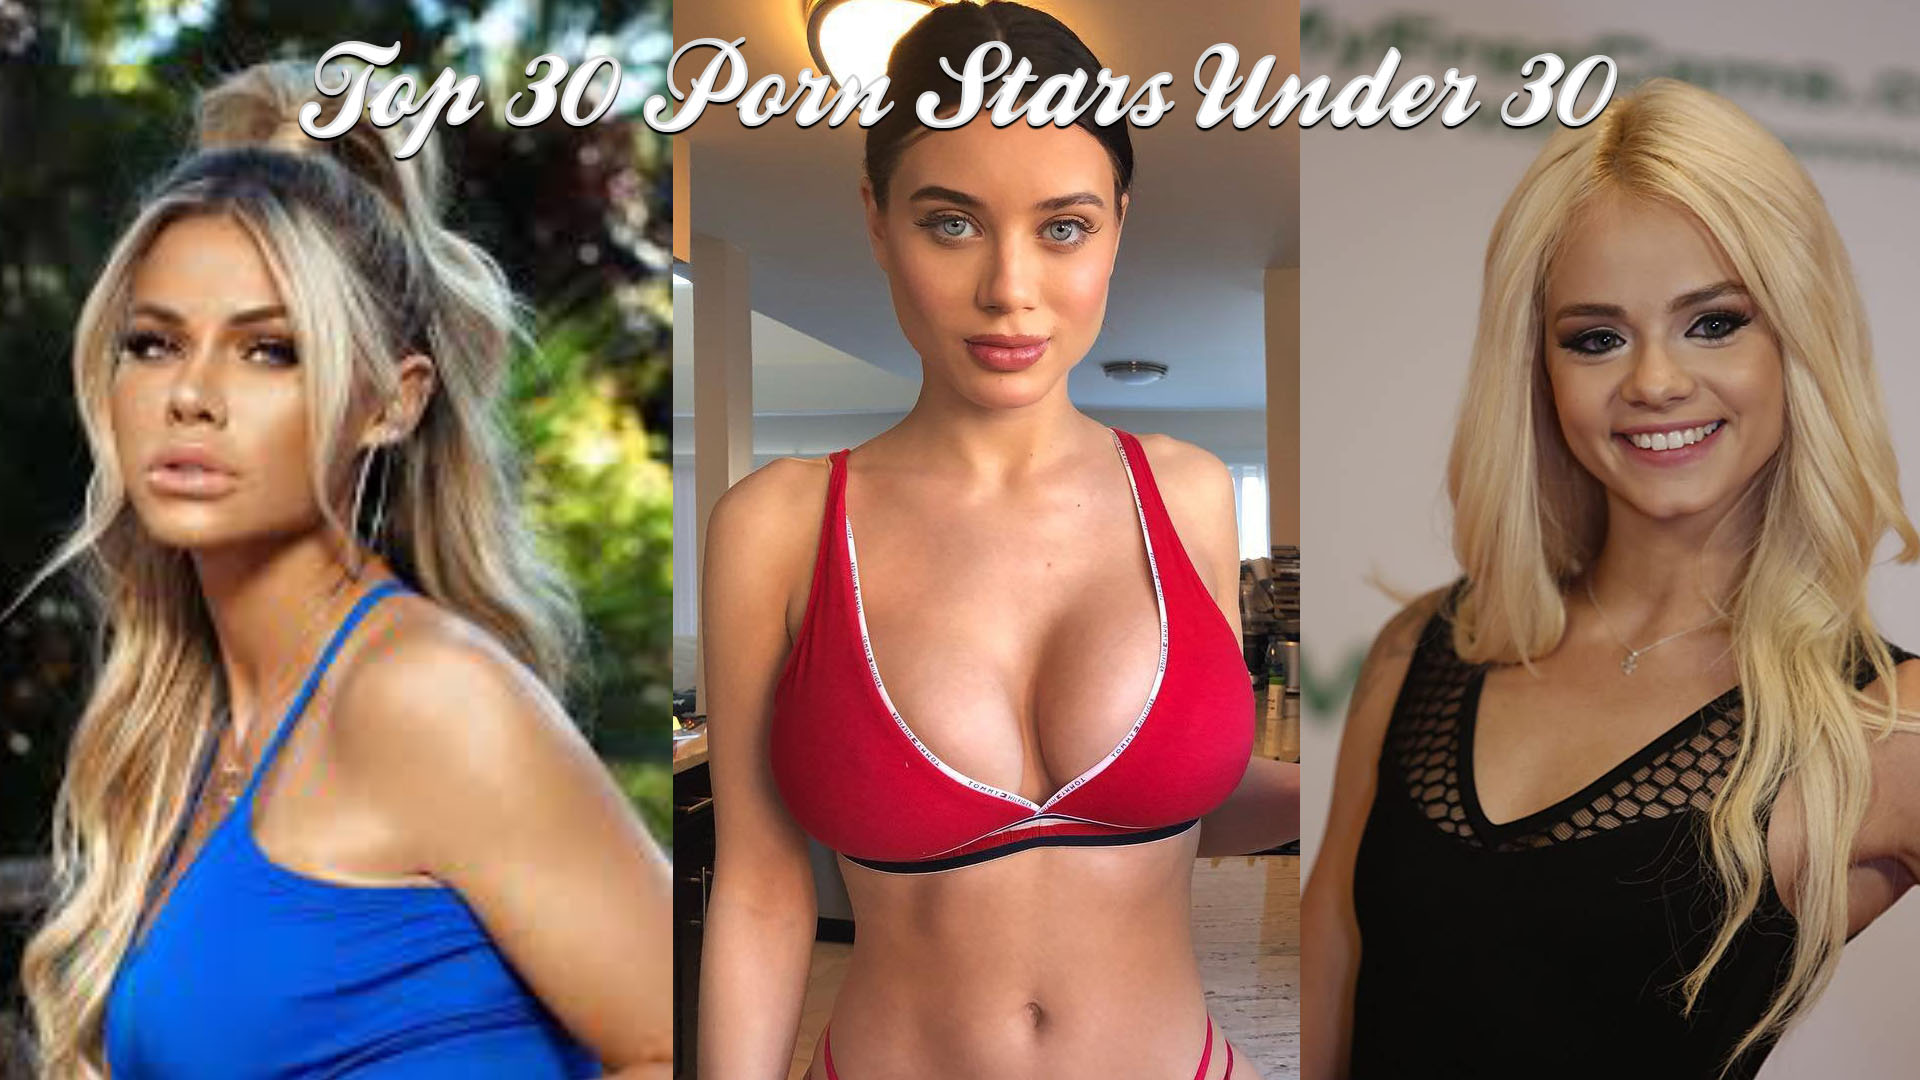 33 year old porn star